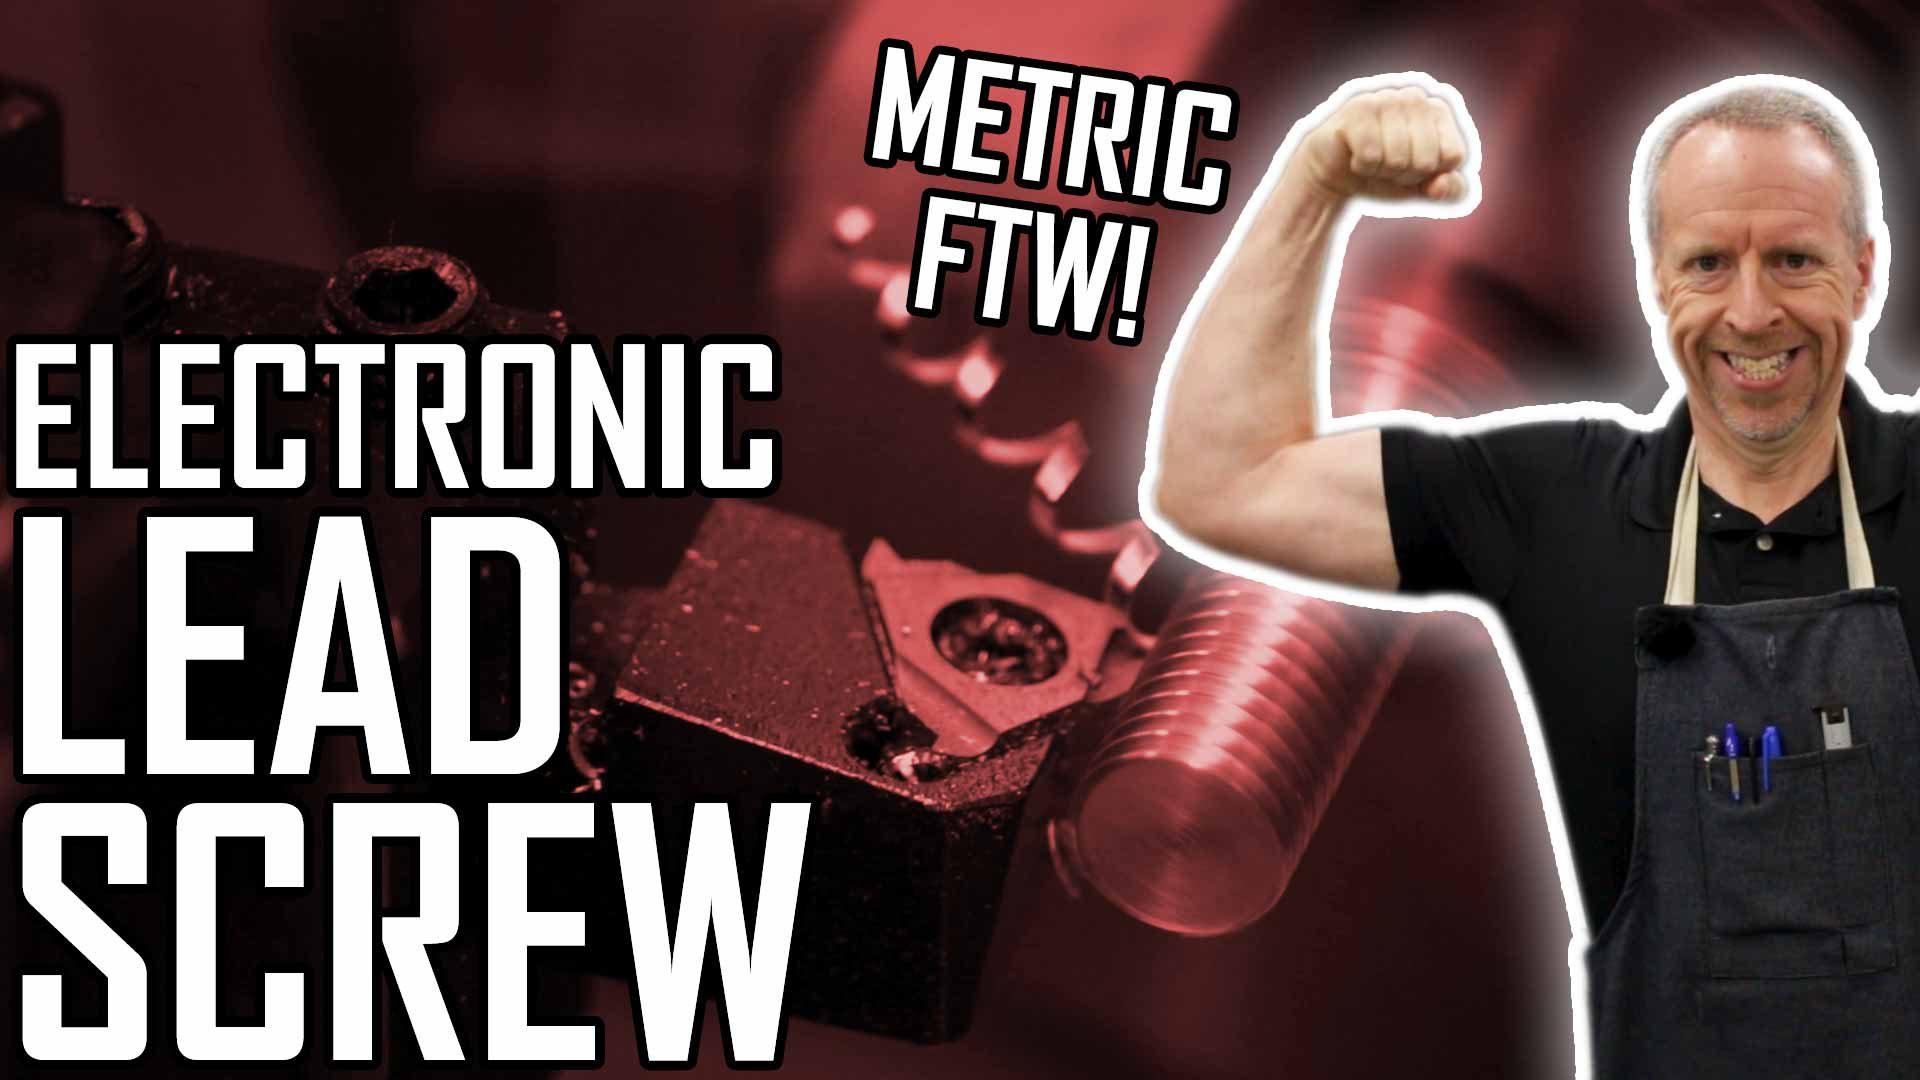 Lathe Electronic Leadscrew Part 7: Metric Threading FTW!